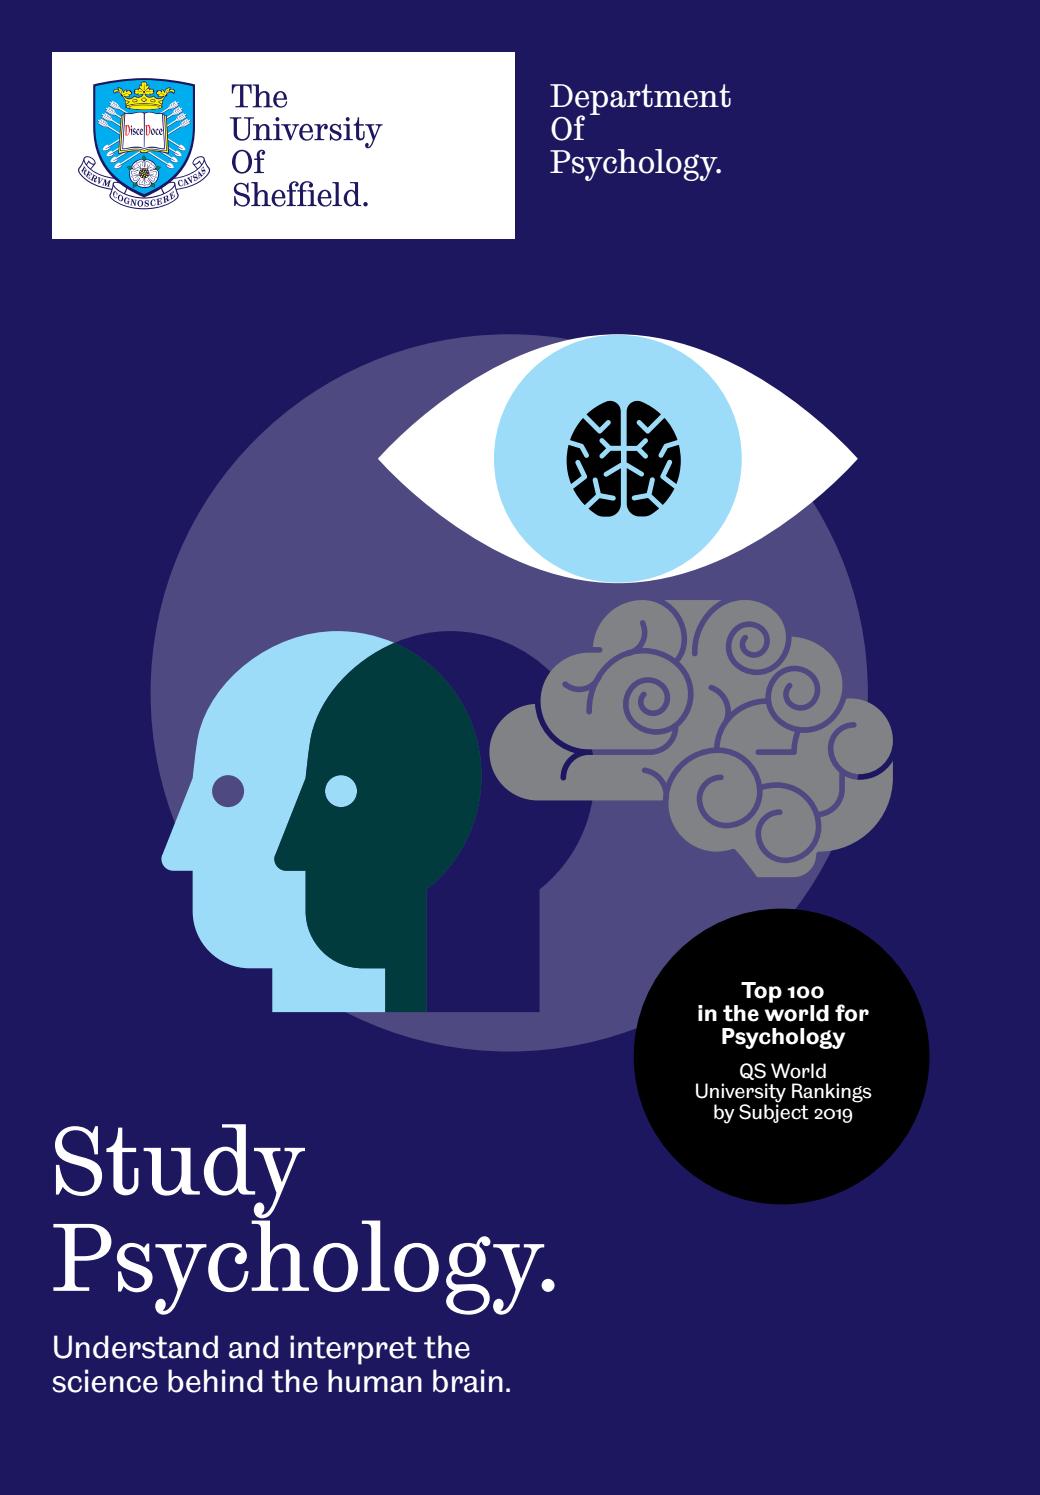 Study Psychology by Science at Sheffield